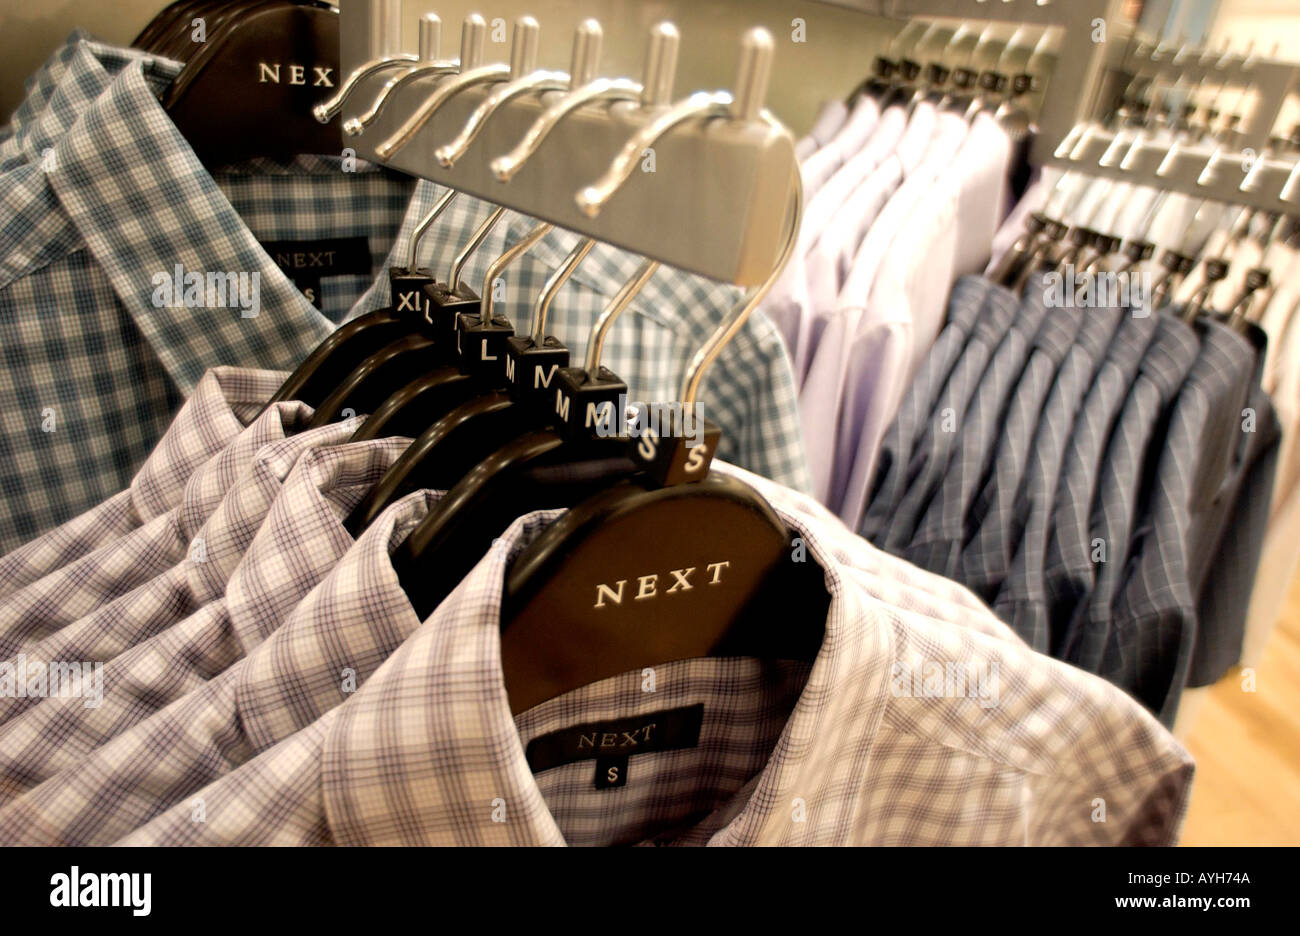 Next store display Stock Photo - Alamy